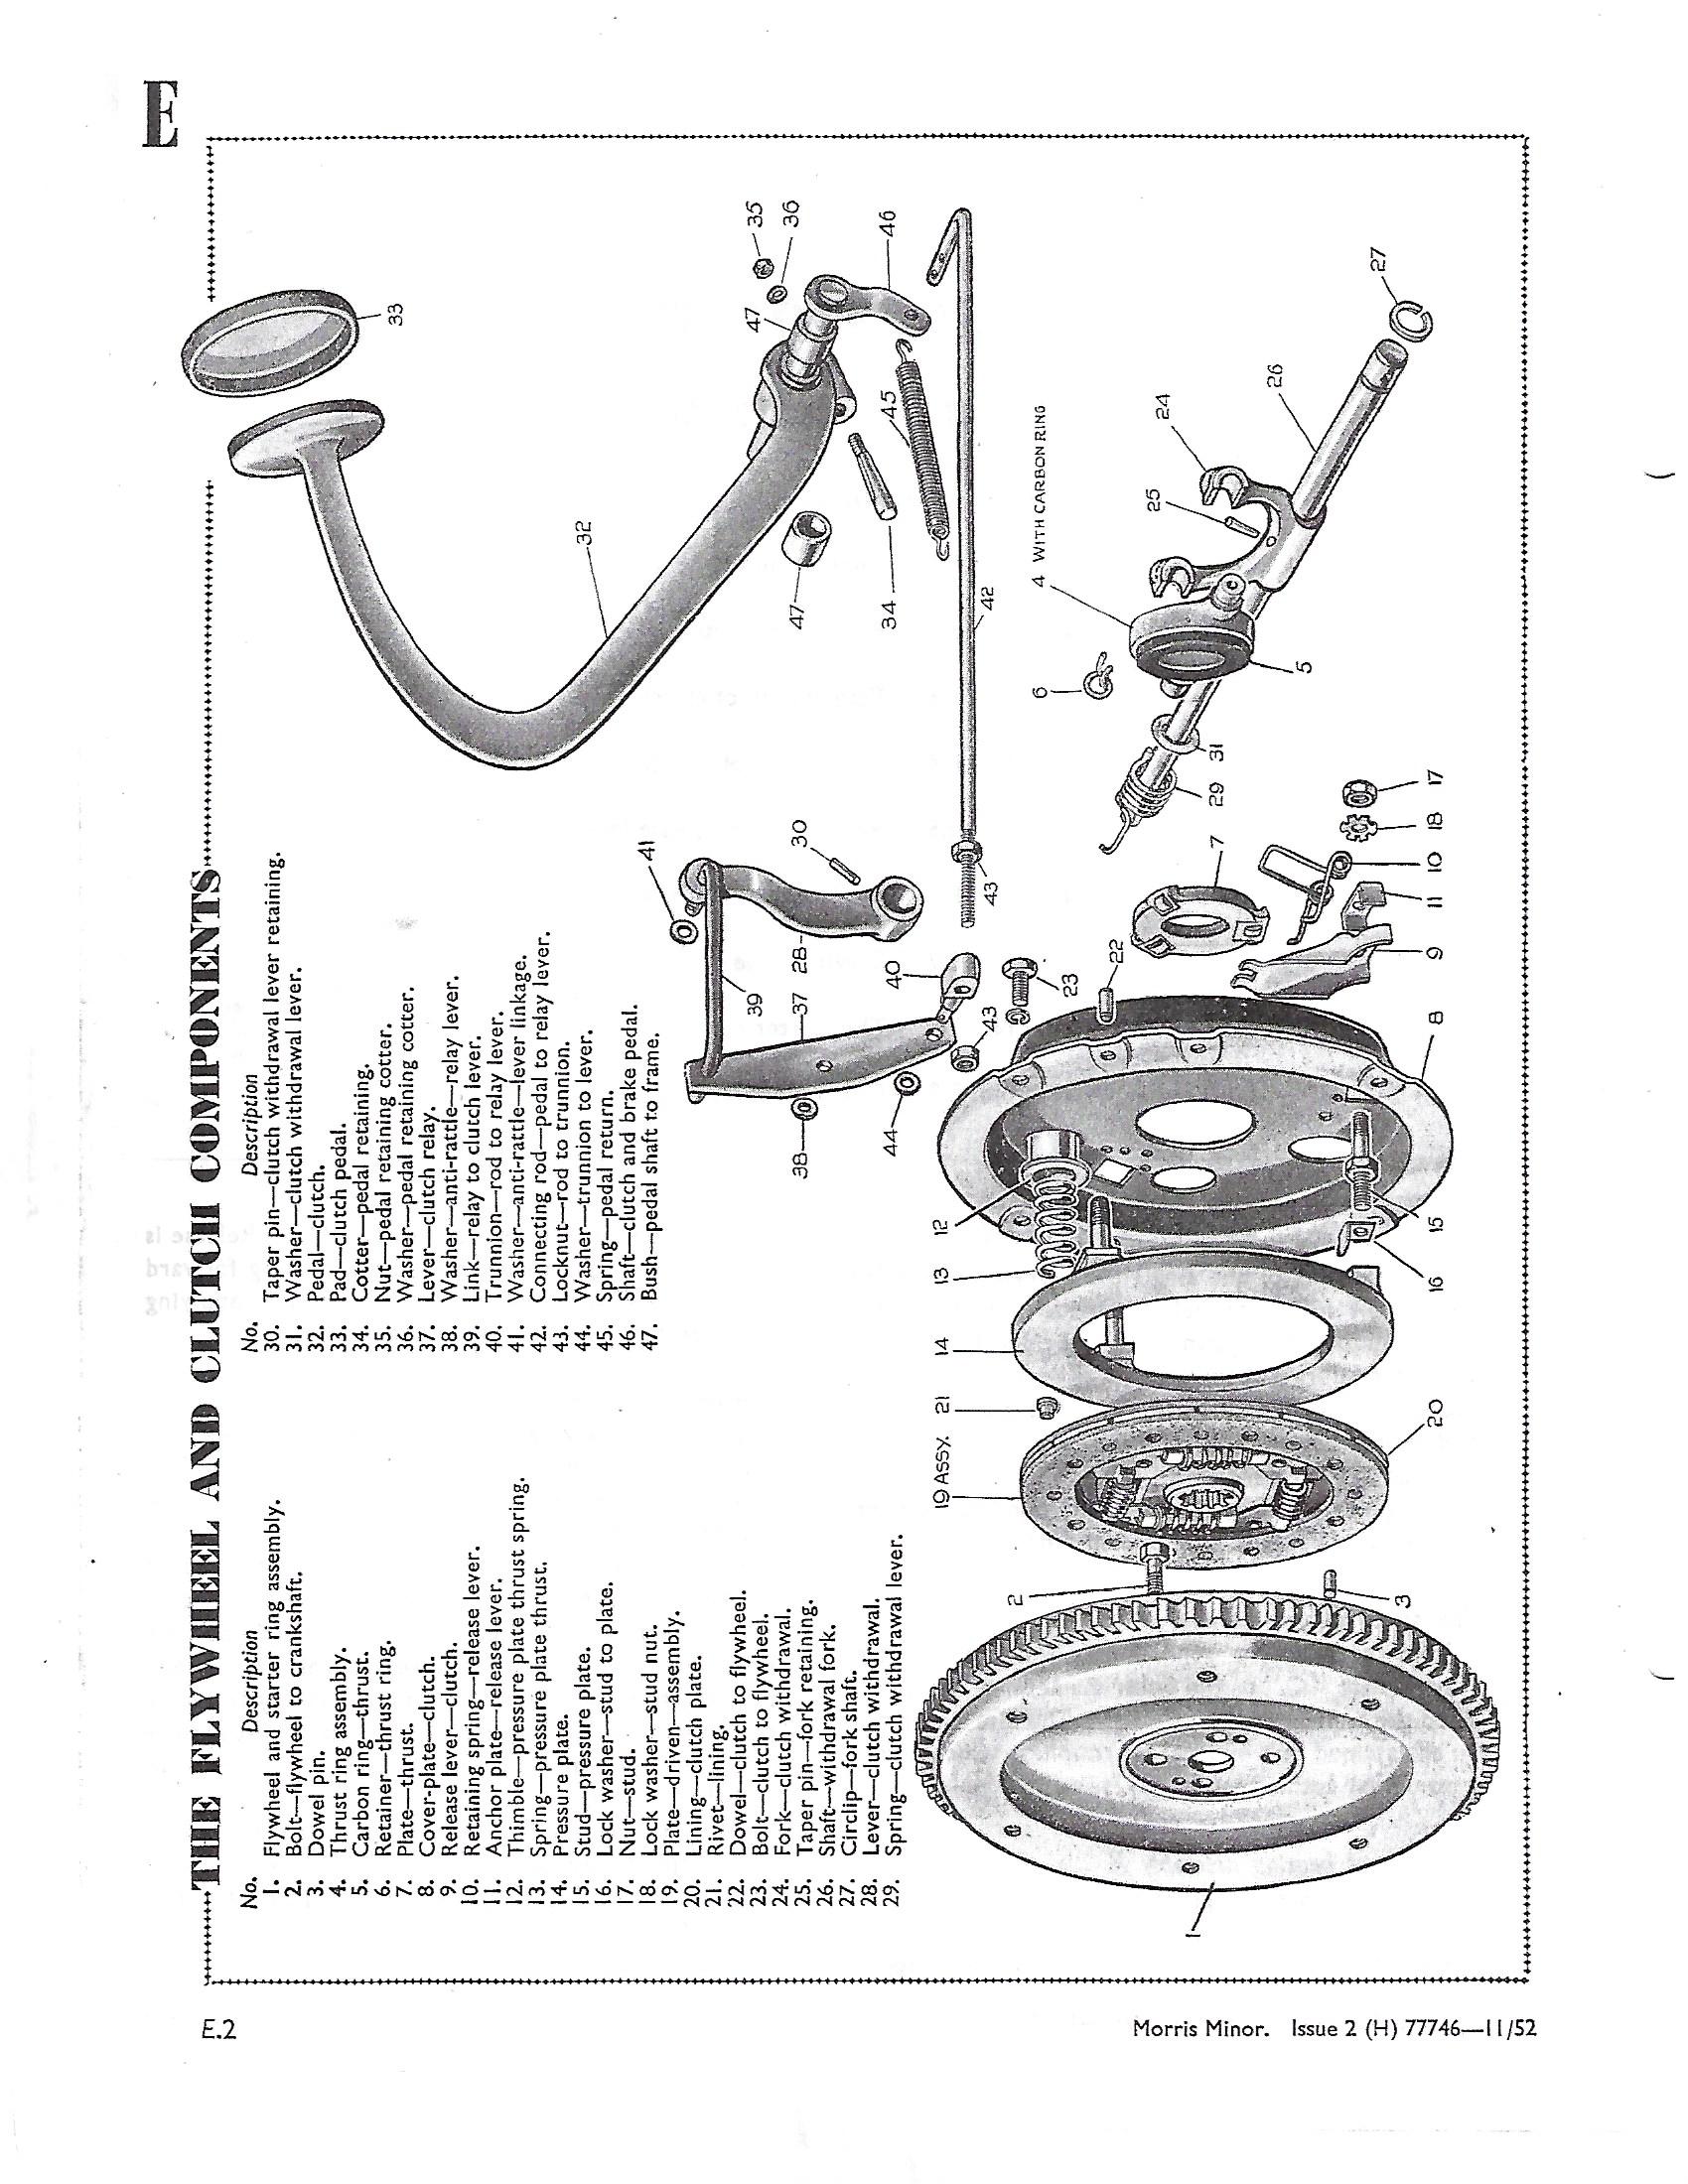 Morris Minor clutch diagram.jpg